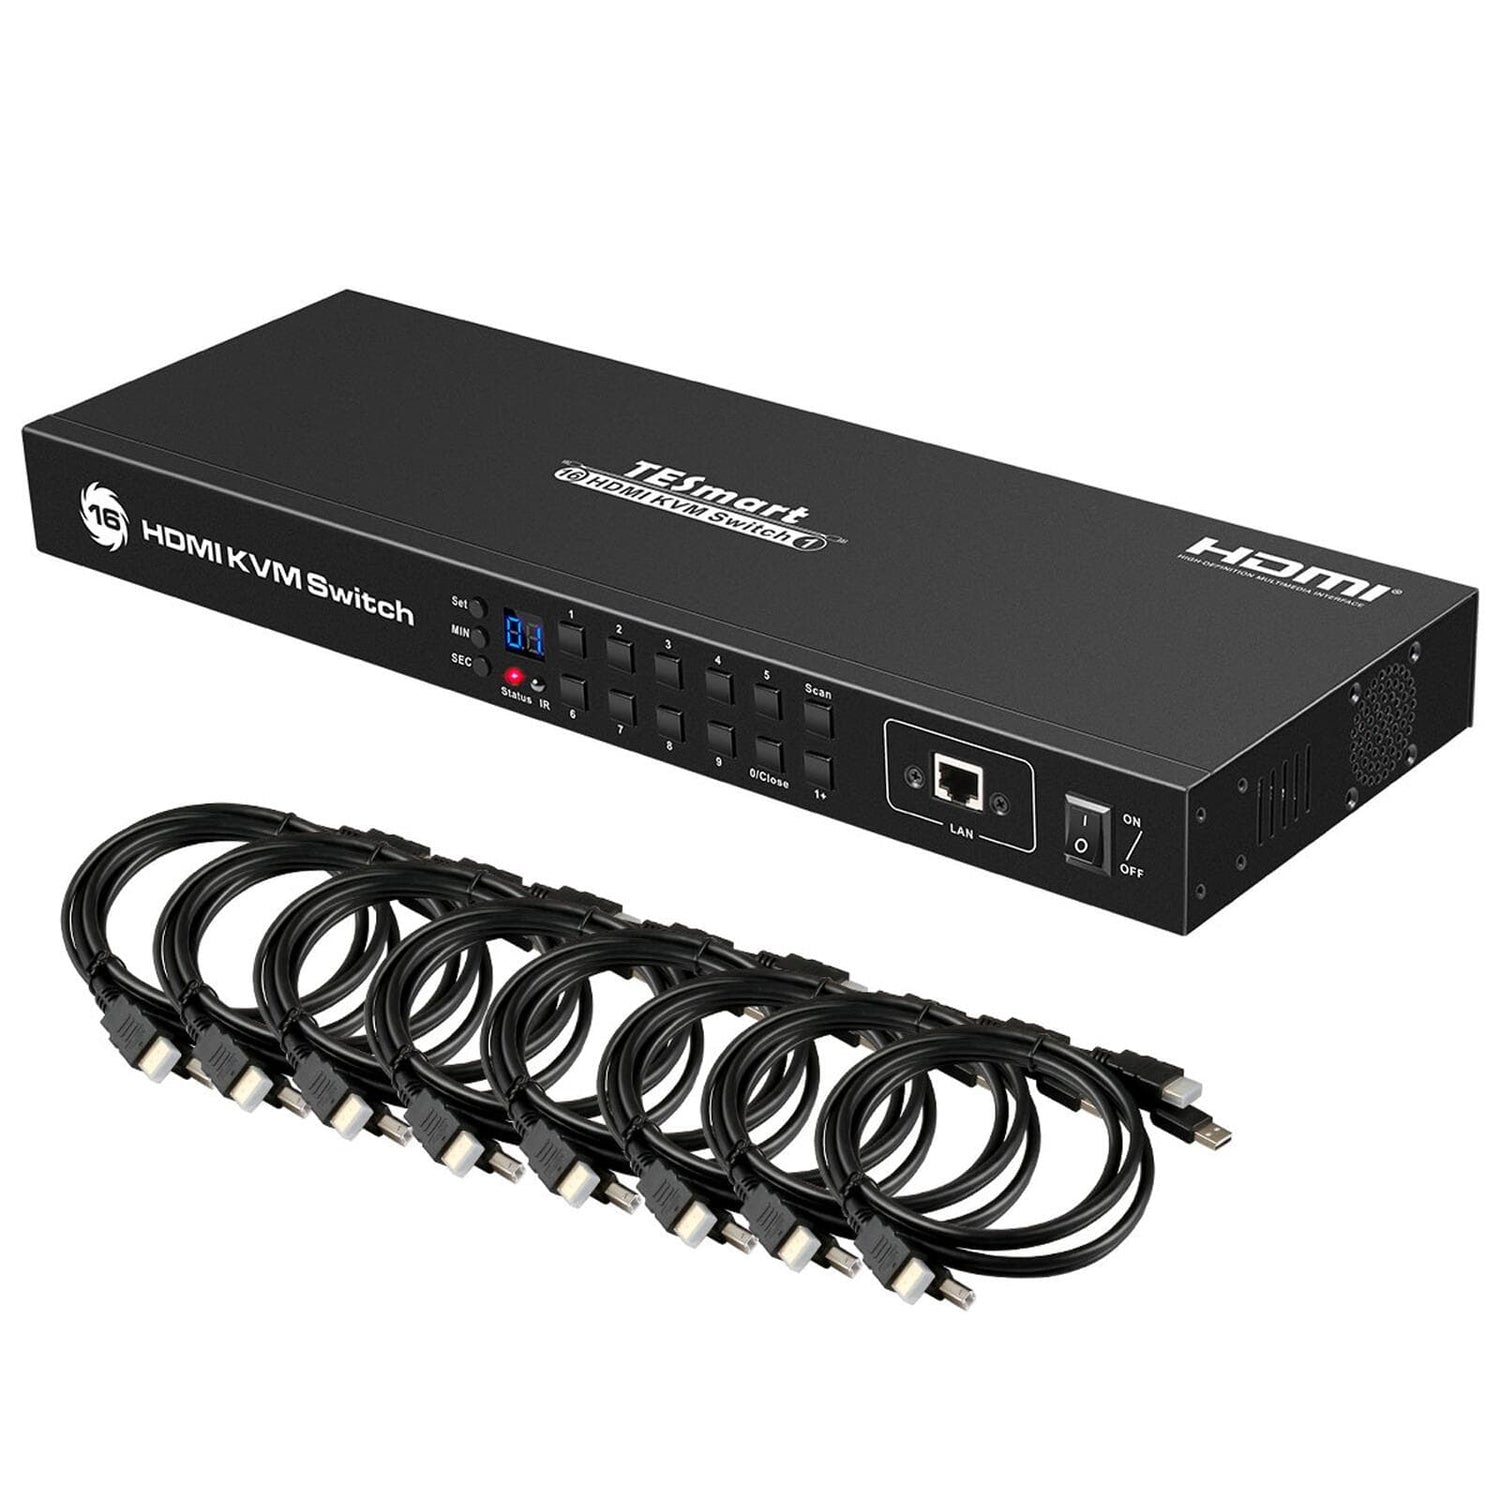 TESmart HKS1601-L23-USBK HDMI KVM Switcher 16 Port HDMI KVM Switch 4K30Hz Support RS232/LAN Control 10659135227201 HDMI KVM switch 16 port 4K USB hub, Rackmount, RS232 TESmart US Plug